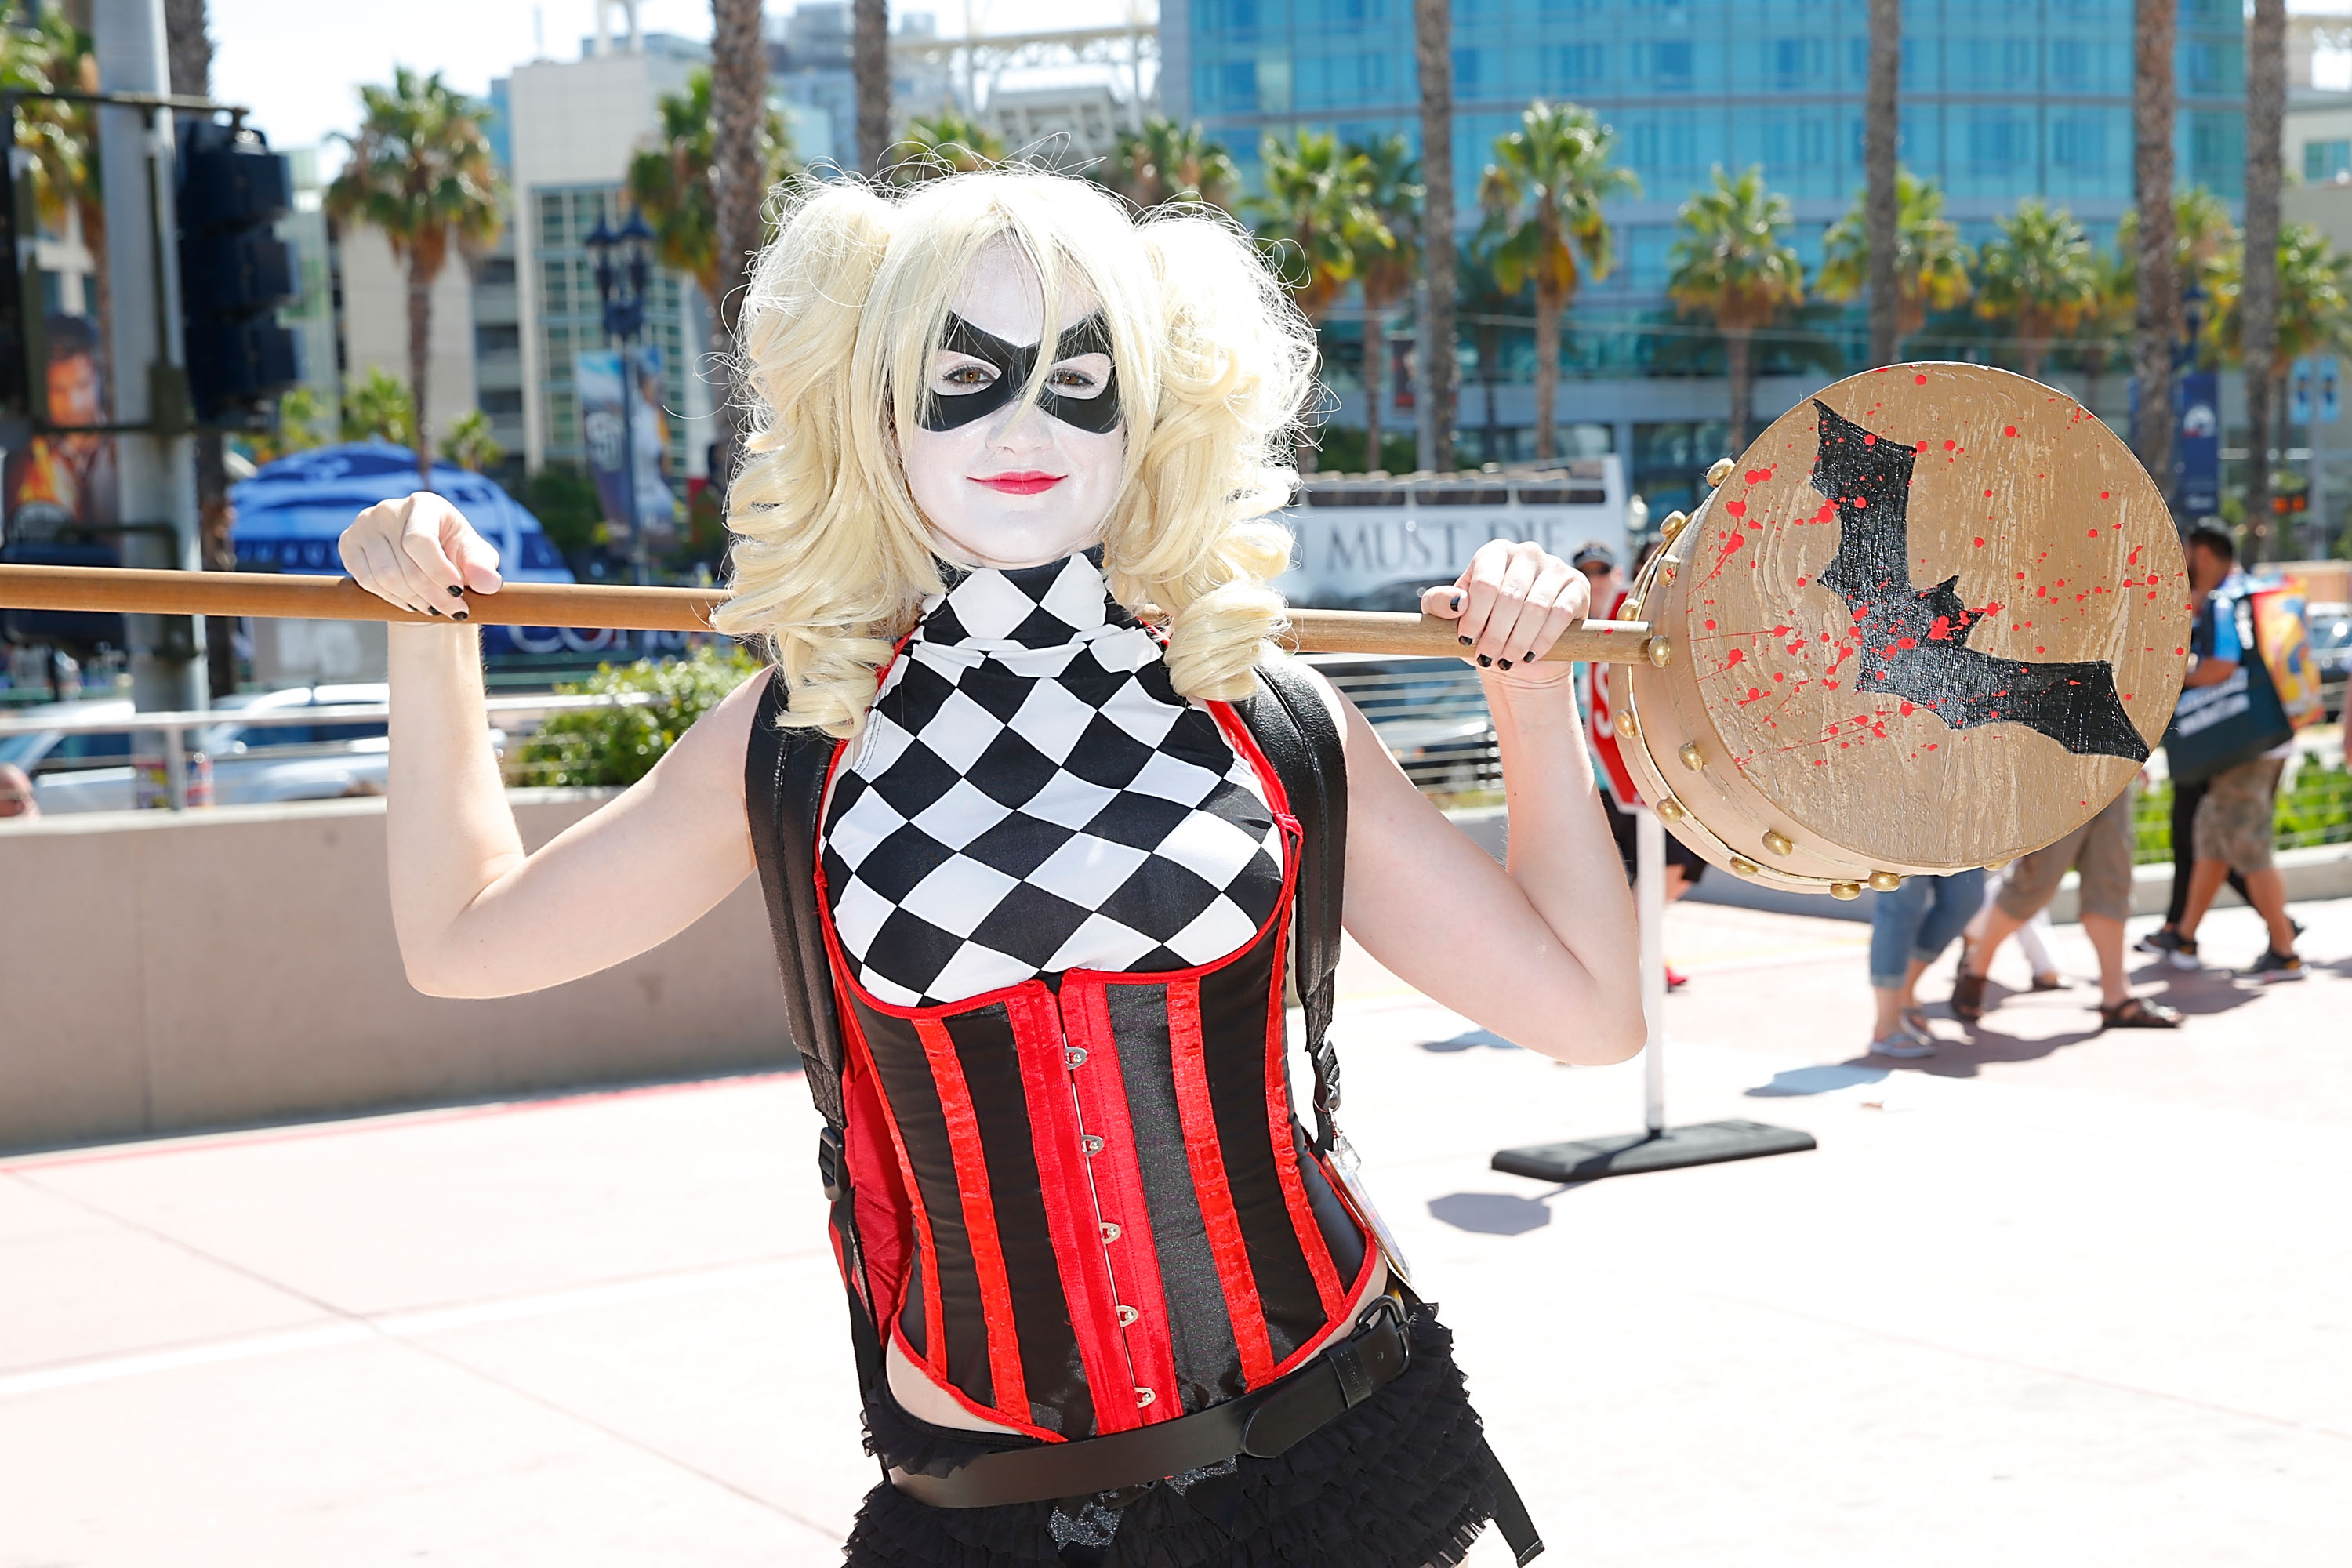 A costumed guest attends Comic-Con International 2014 - Day 1 on July 24, 2014 in San Diego, California. (Joe Scarnici&mdash;FilmMagic)